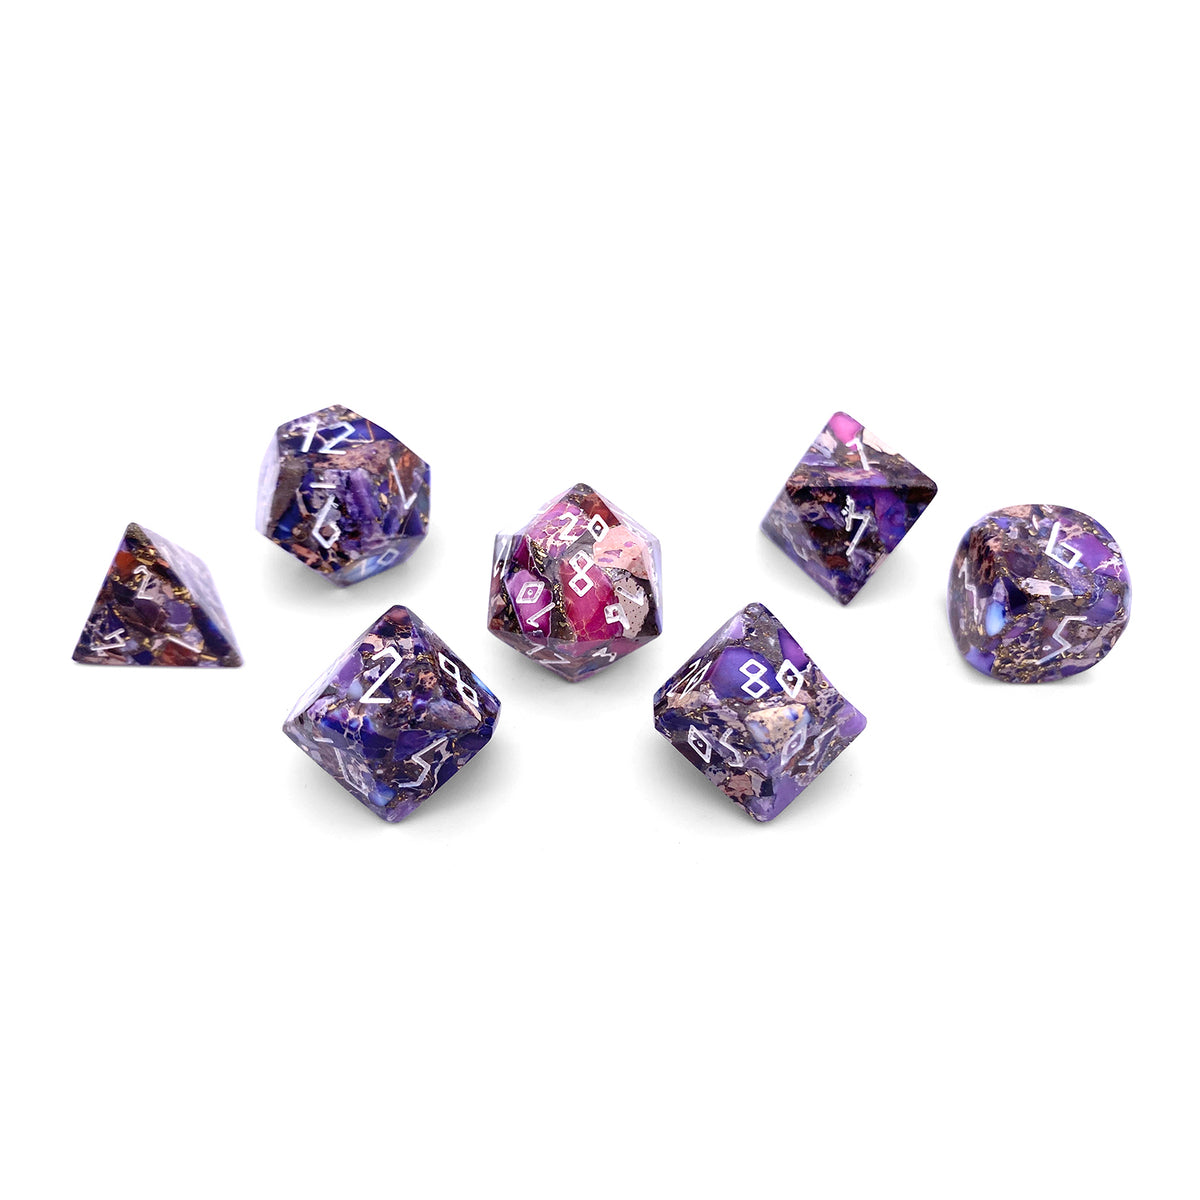 Bronzite Purple Imperial Jasper - 7 Piece RPG Set TruStone Dice